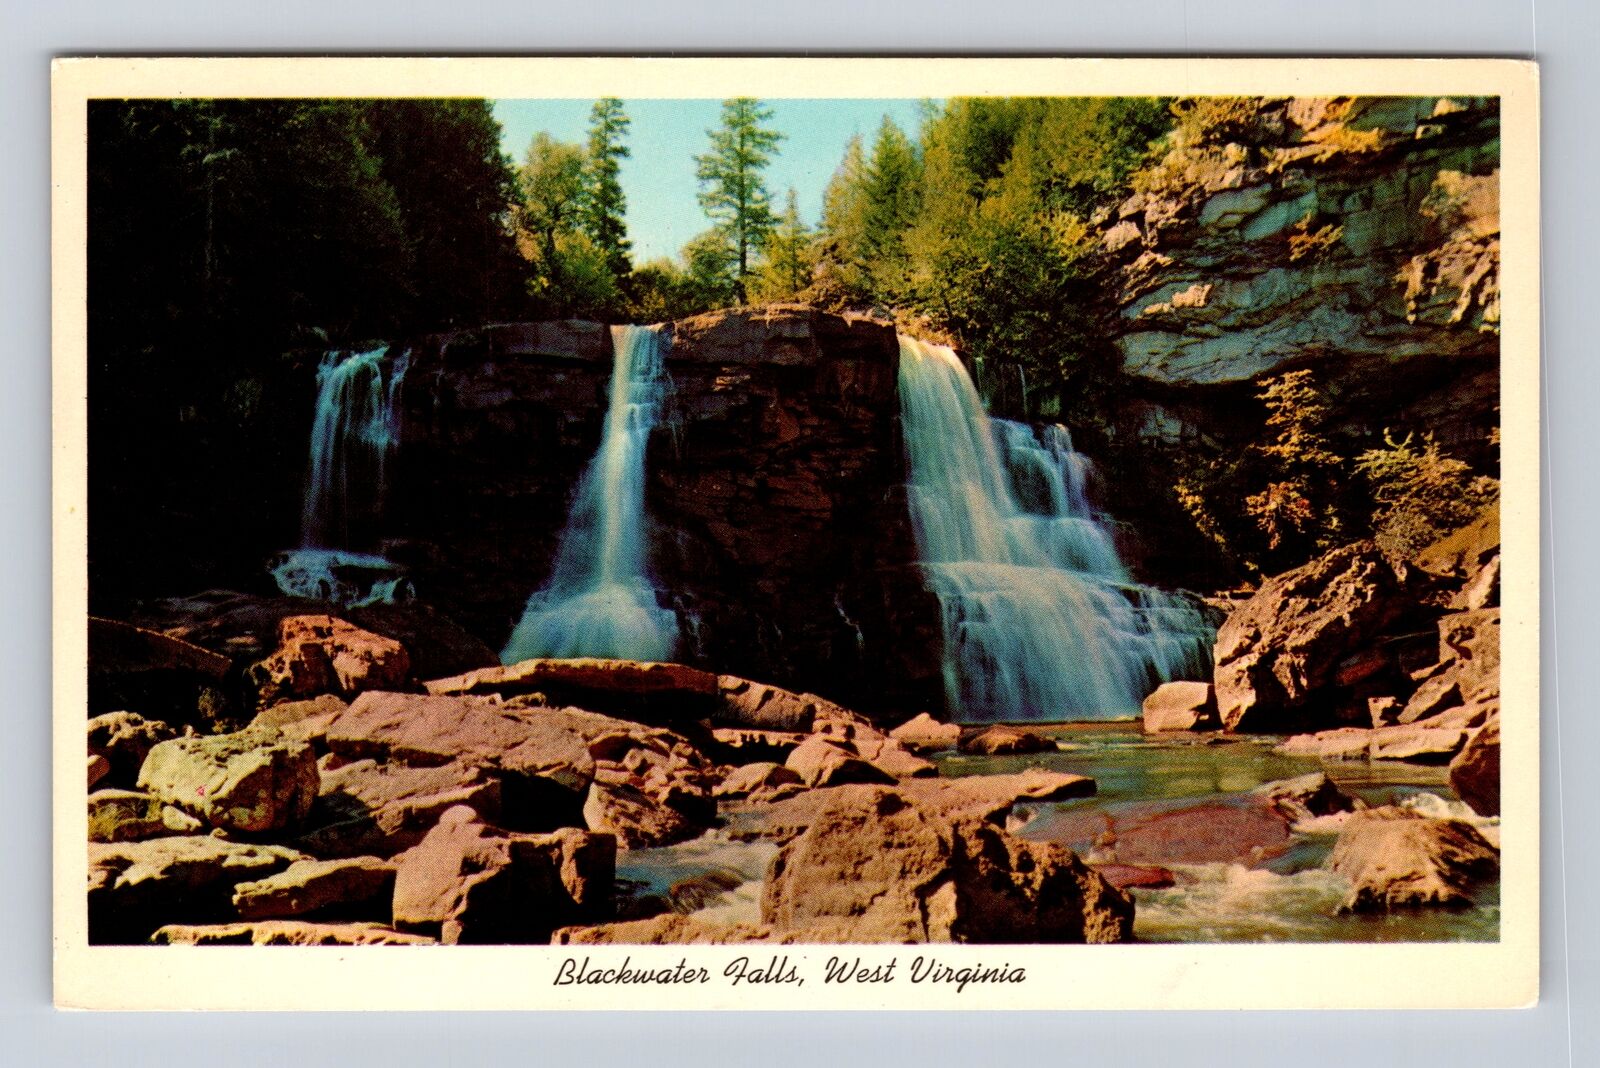 WV-West Virginia, Blackwater Falls, Antique, Vintage Souvenir Postcard